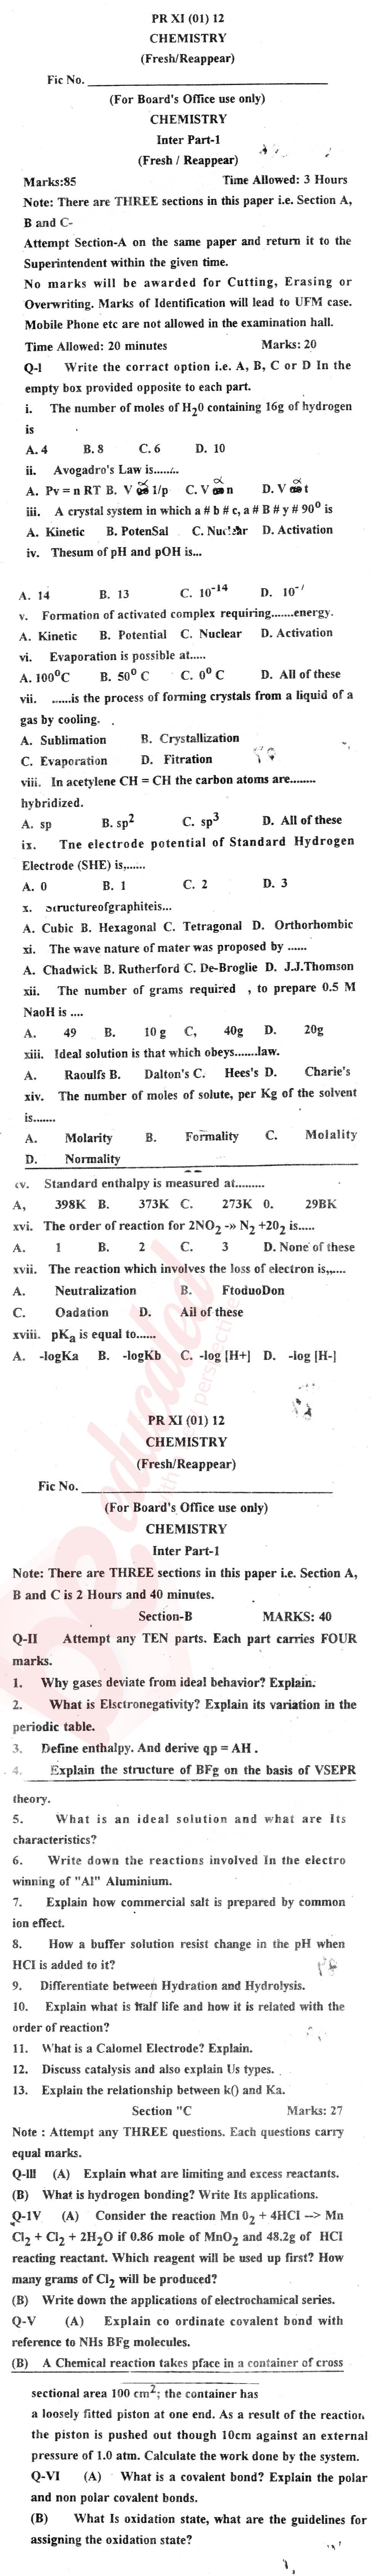 Chemistry FSC Part 1 Past Paper Group 1 BISE Bannu 2012